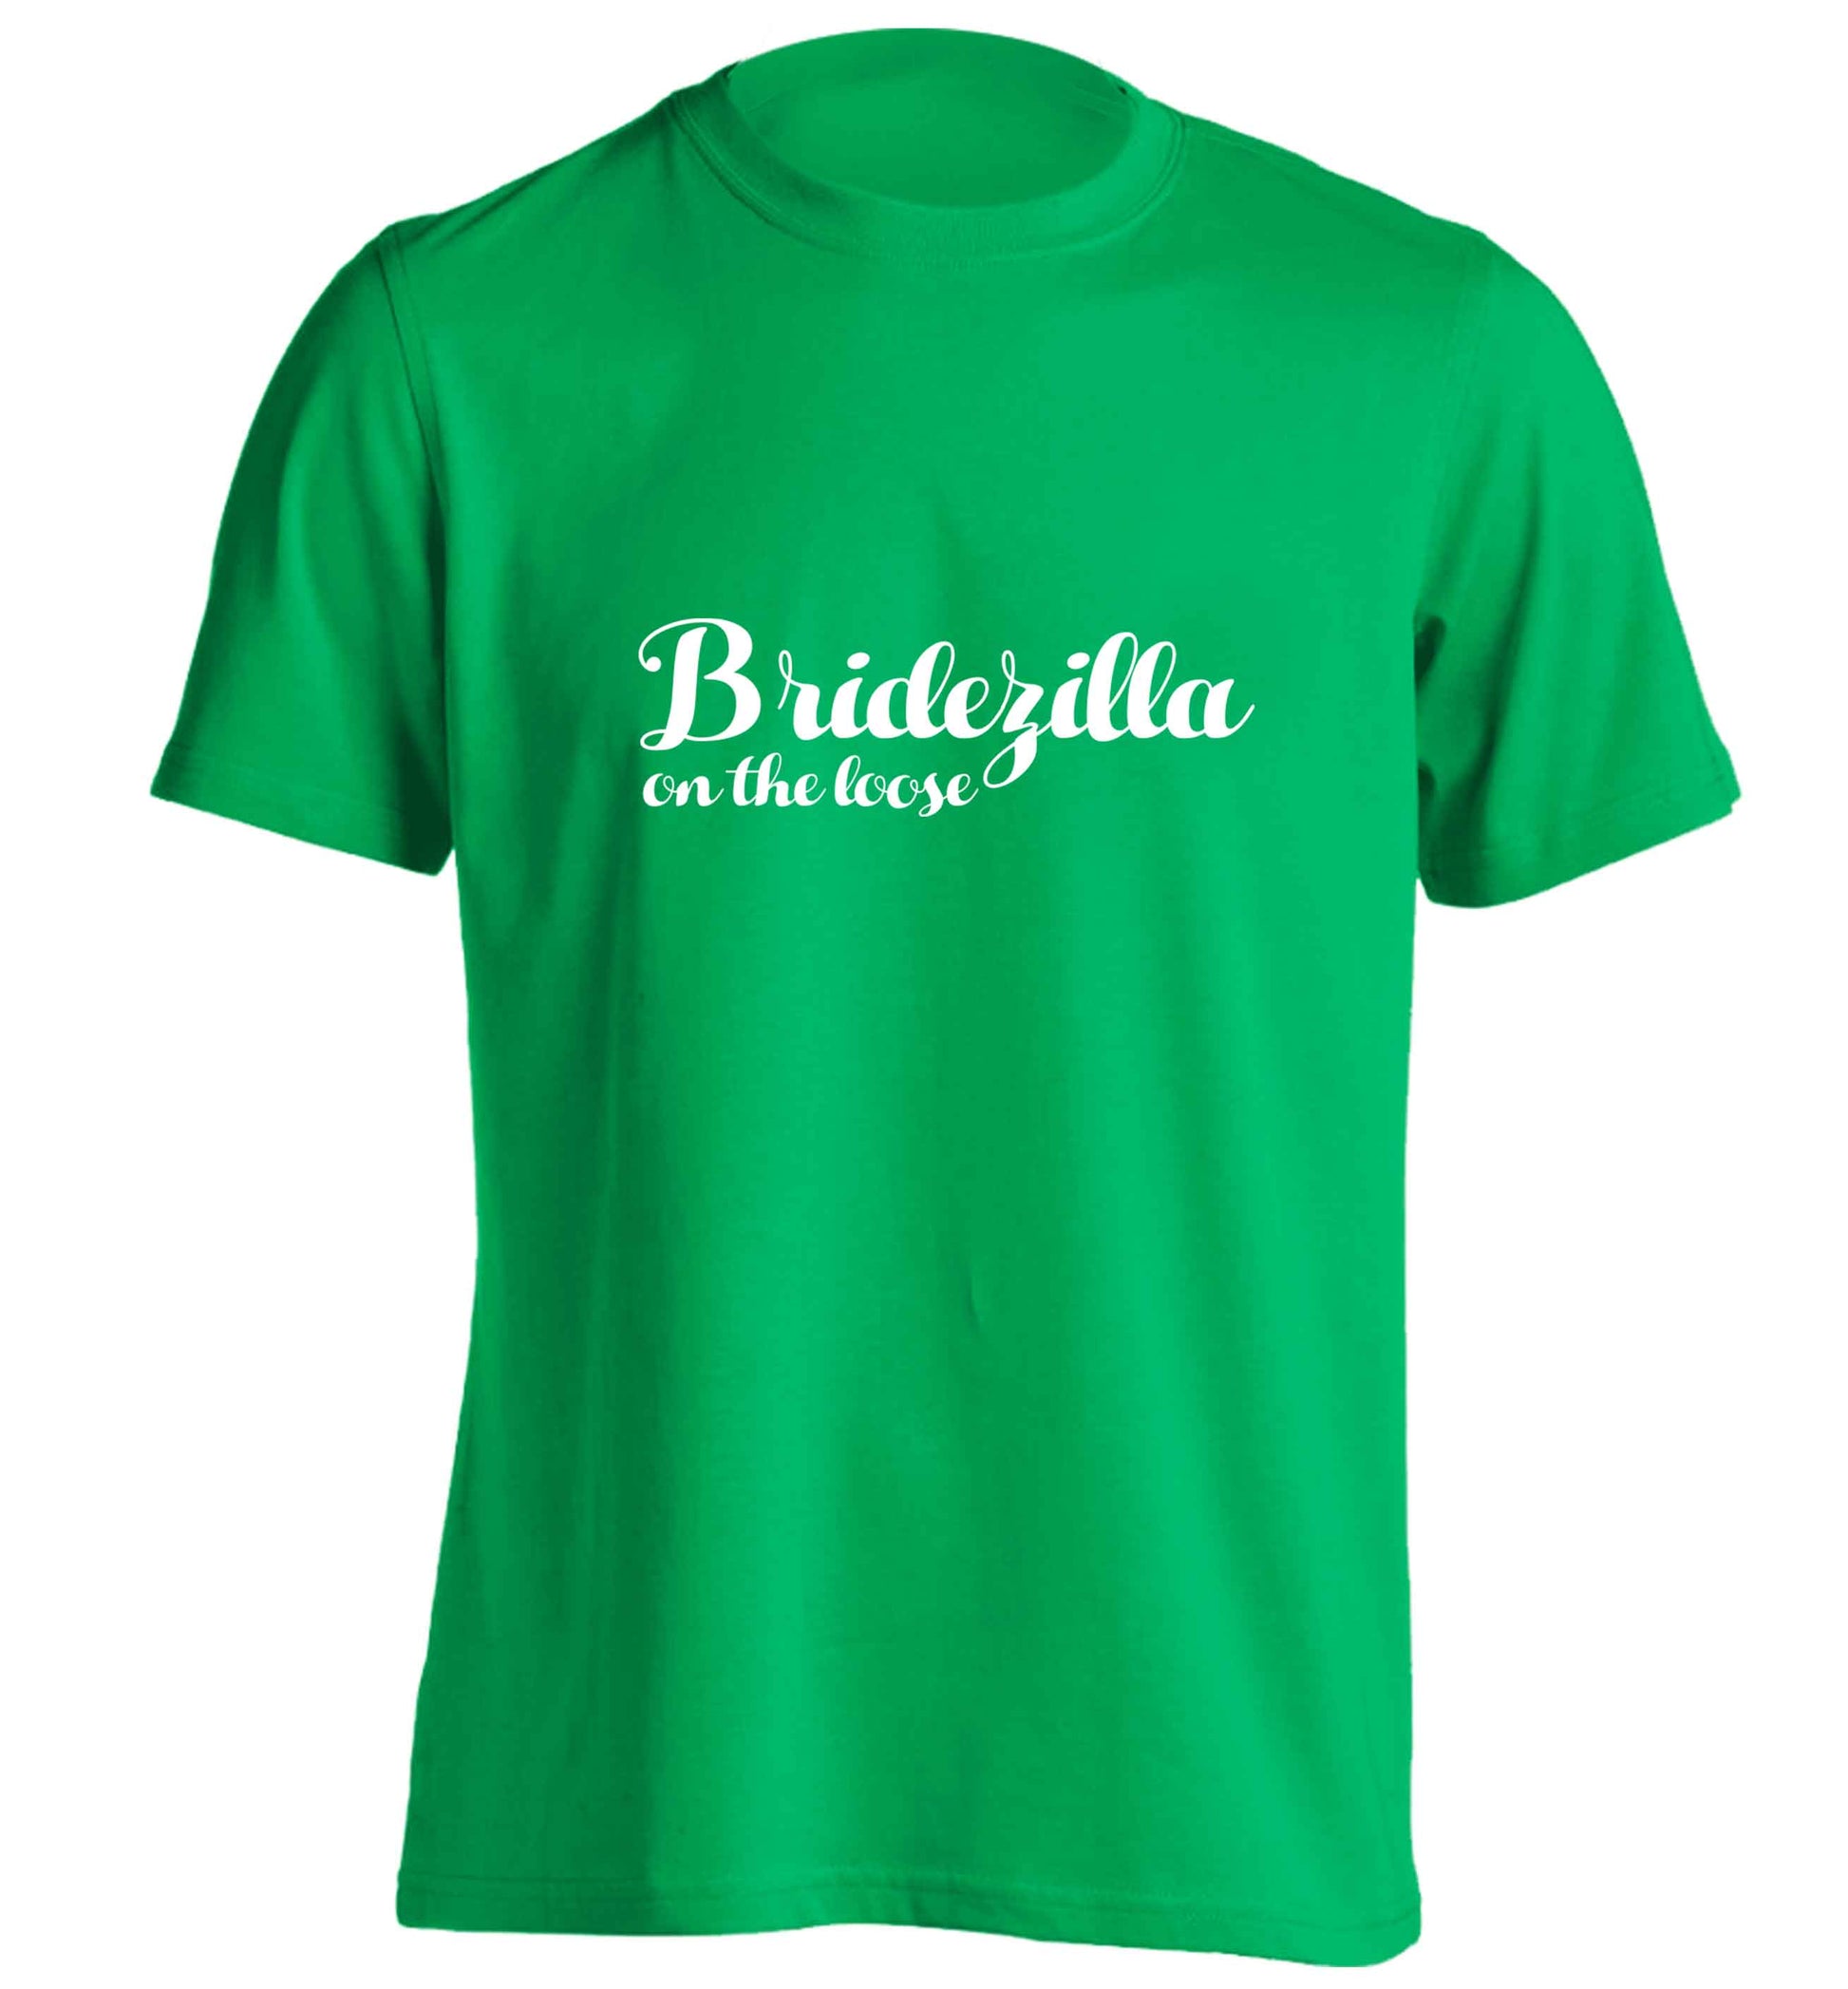 Bridezilla on the loose adults unisex green Tshirt 2XL